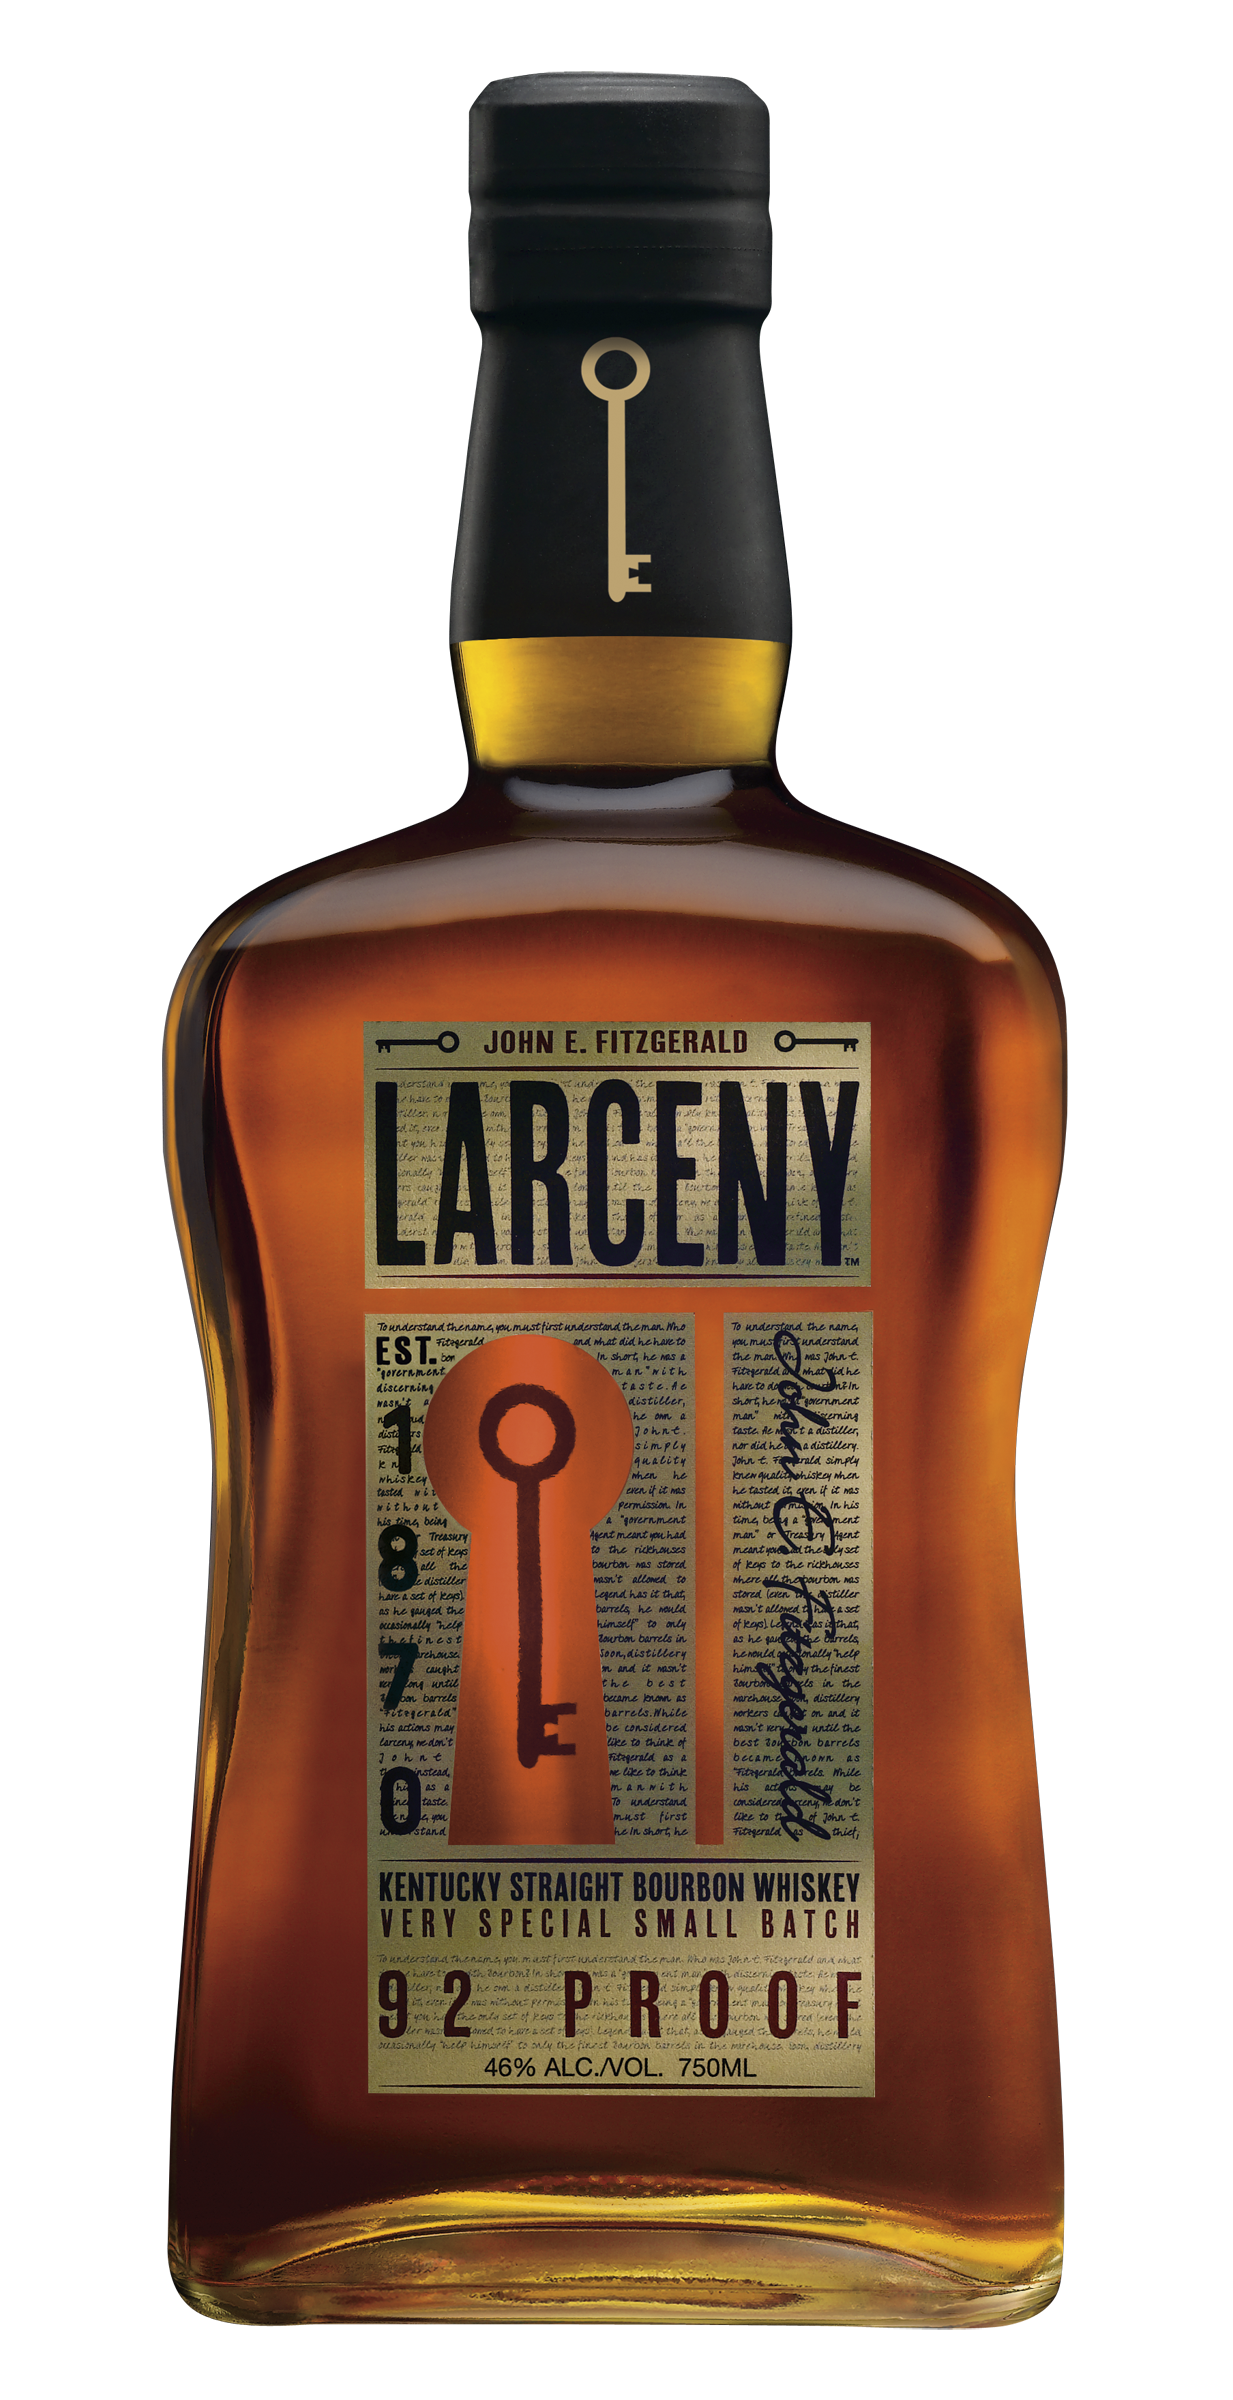 Larceny Bourbon Very Small Batch 750ml